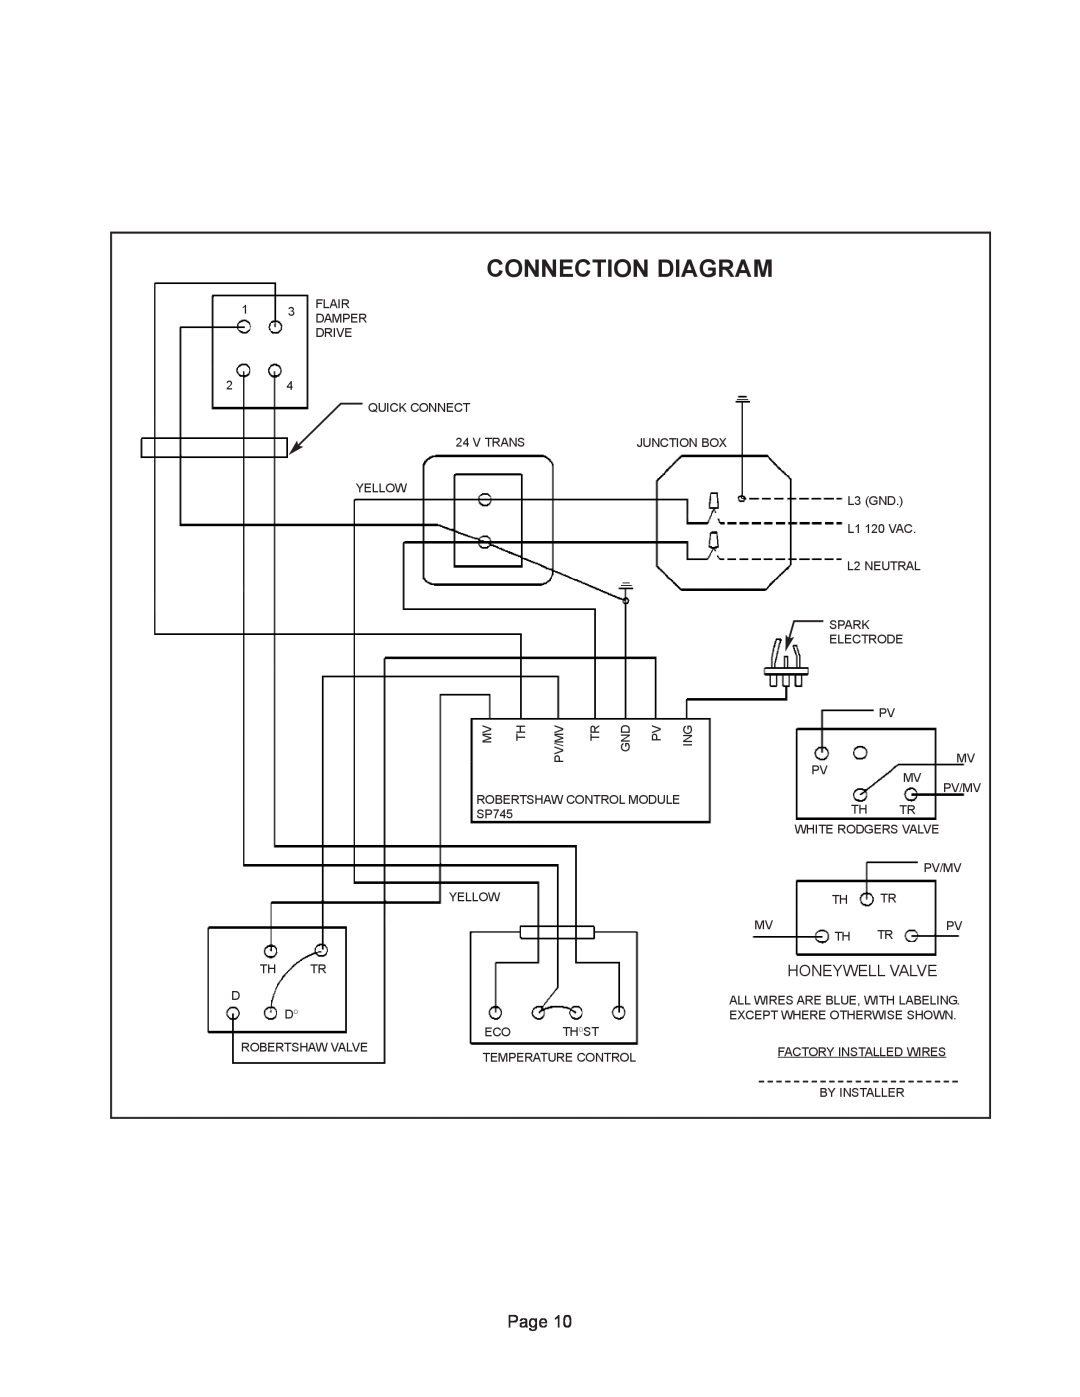 GSW G65 instruction manual Connection Diagram, Honeywell Valve 